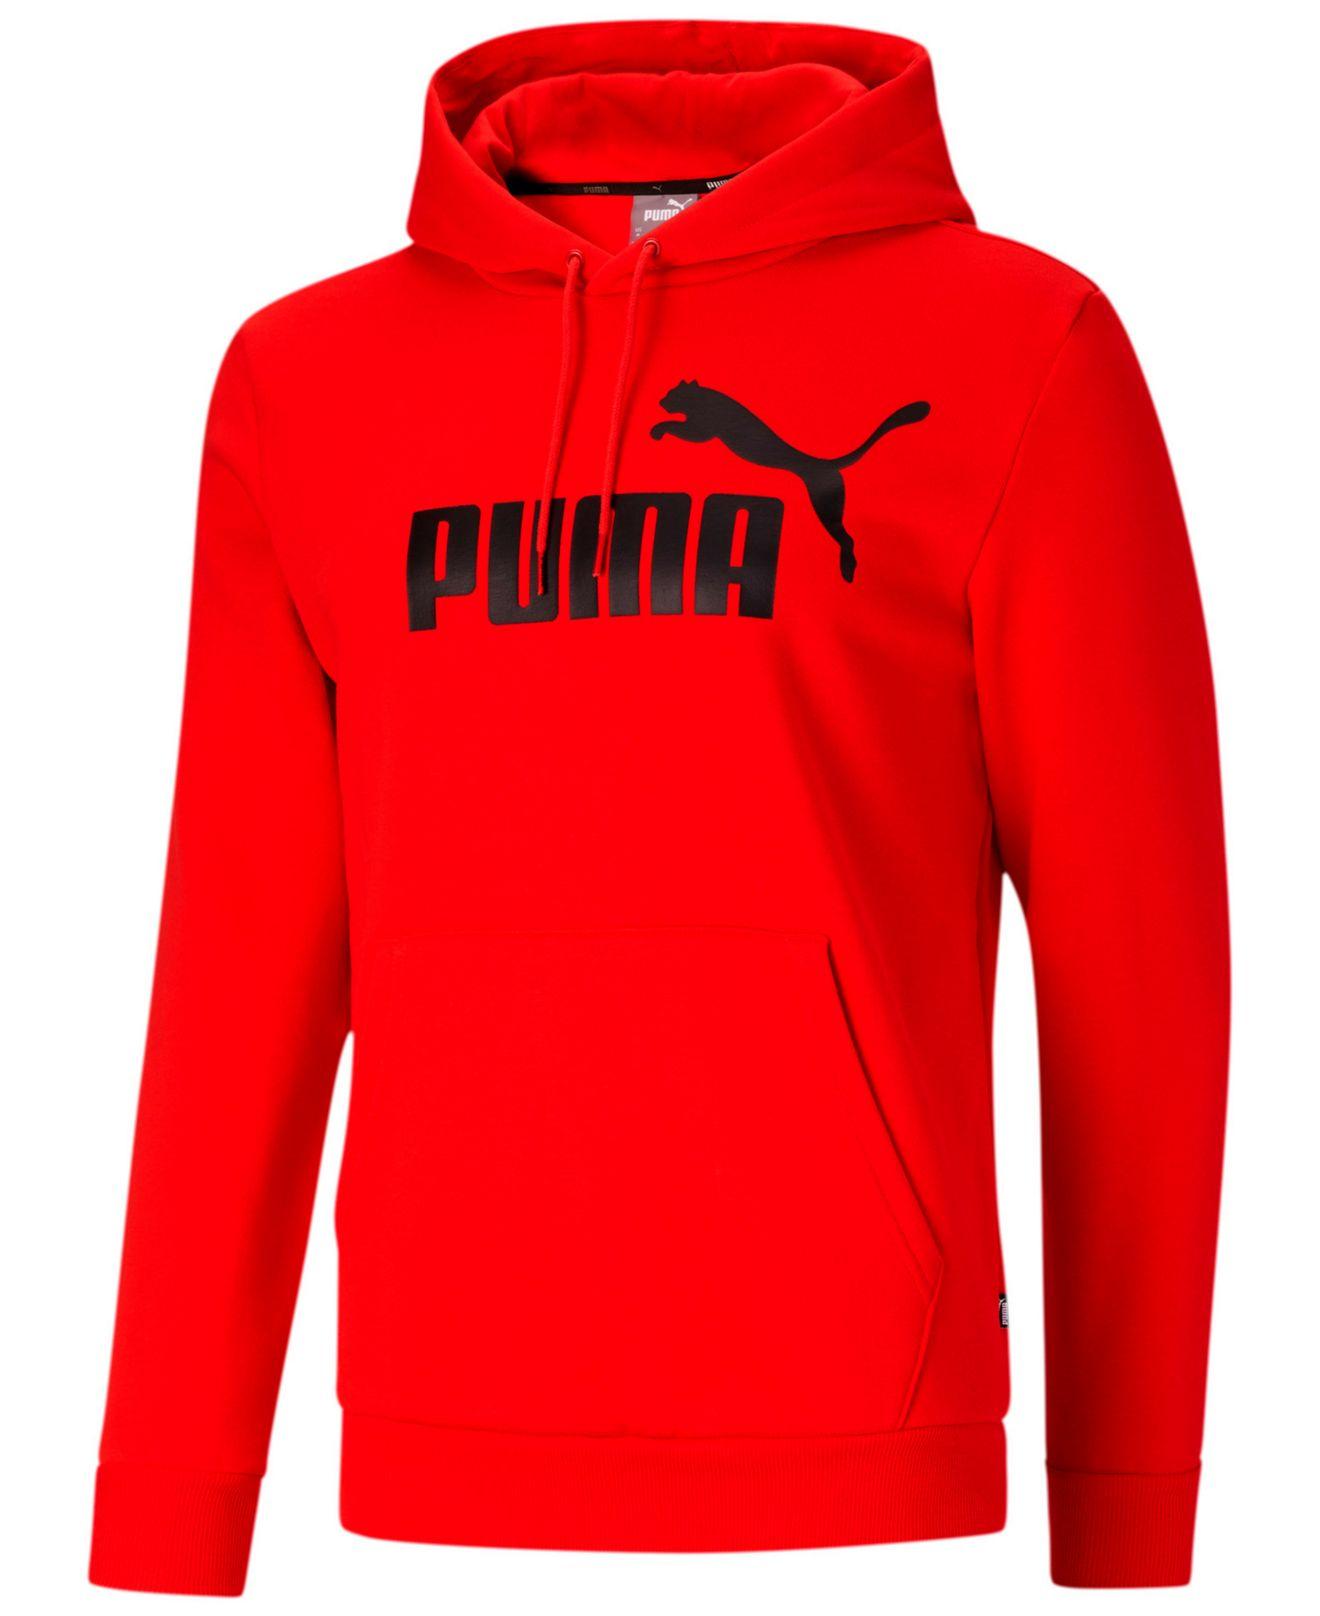 PUMA Fleece Logo Hoodie in Red for Men - Lyst